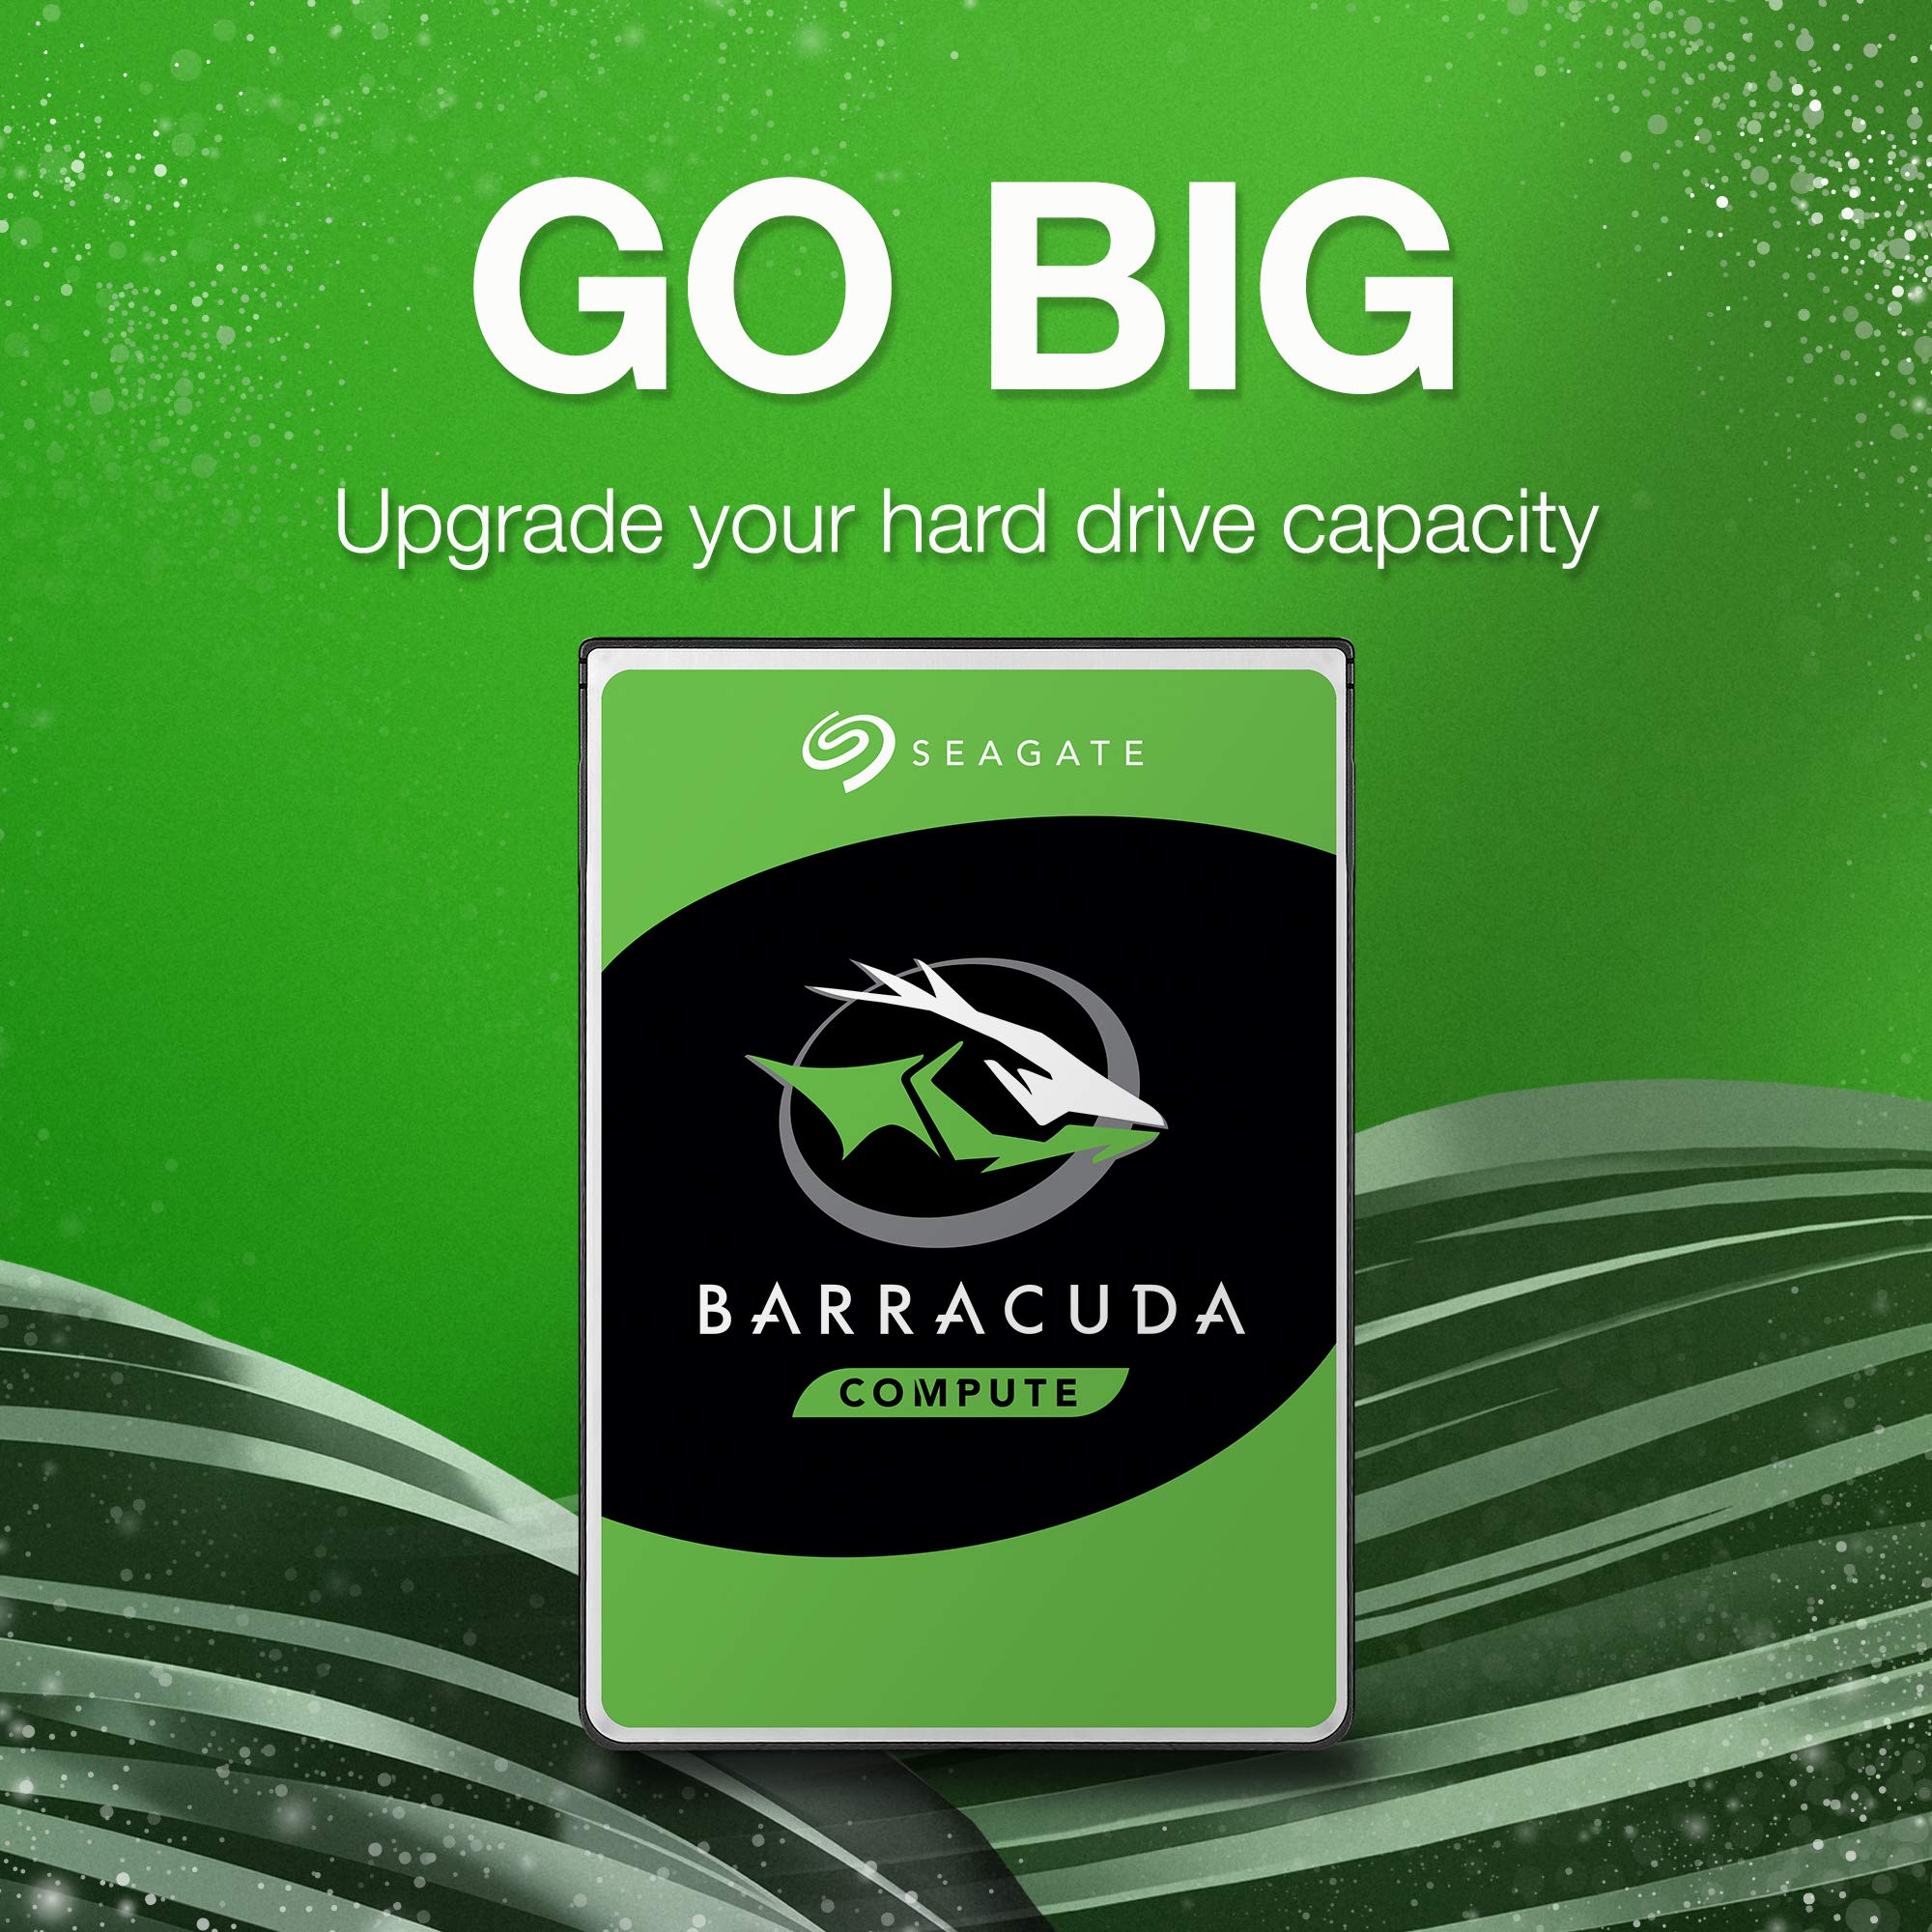 Seagate BarraCuda 2TB Internal Hard Drive HDD – 3.5 Inch SATA 6 Gb/s 7200 RPM 64MB Cache for Computer Desktop PC Laptop (ST2000DM006)